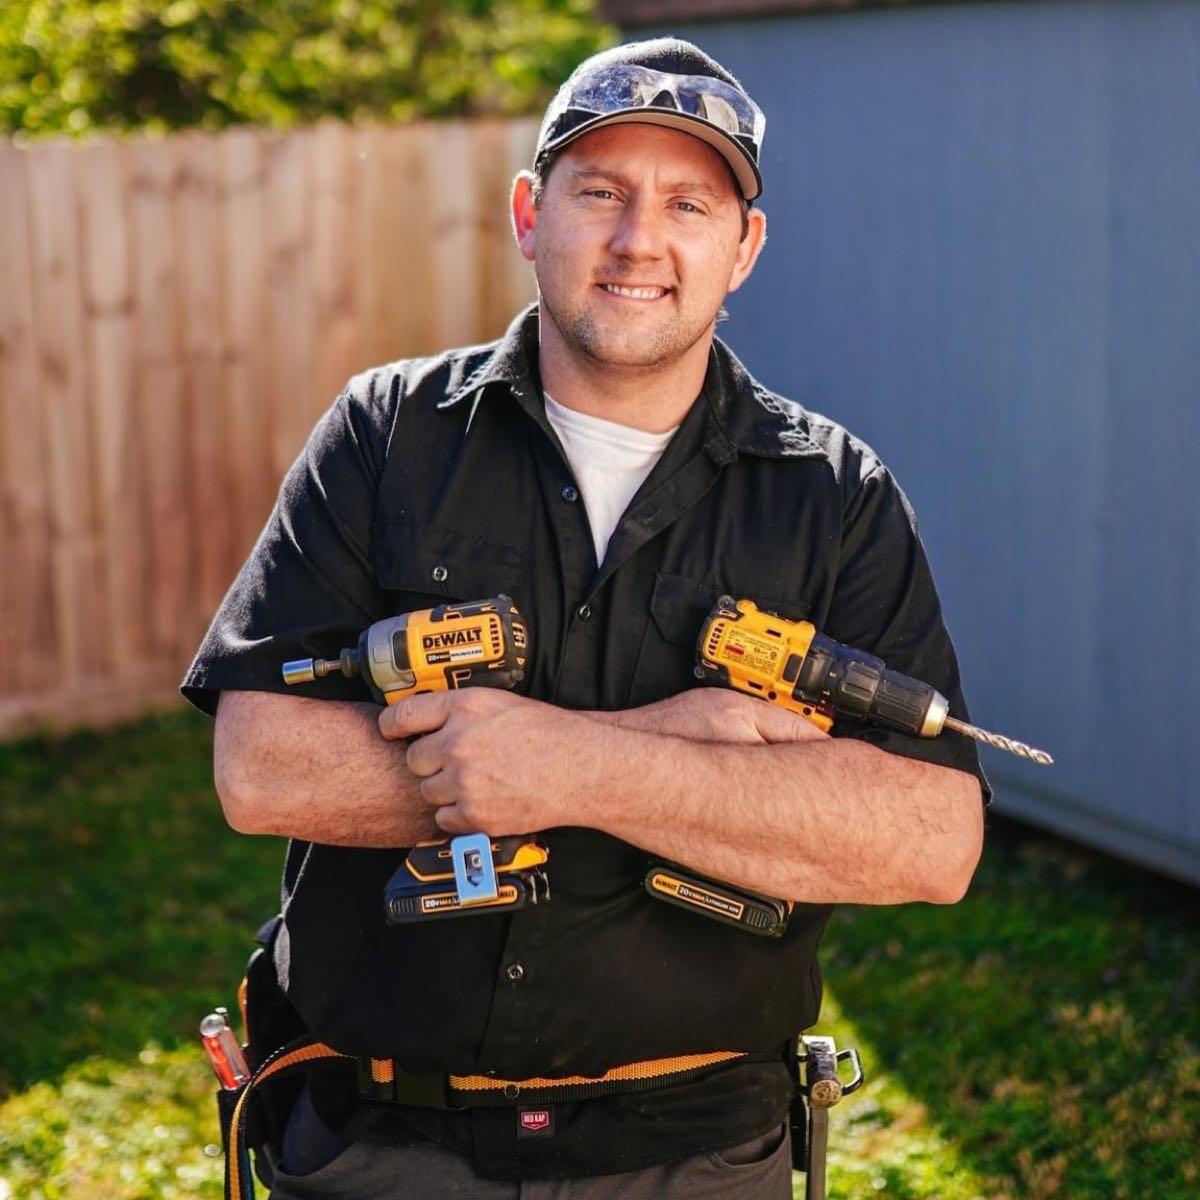 Tooling around handyman services - Nextdoor